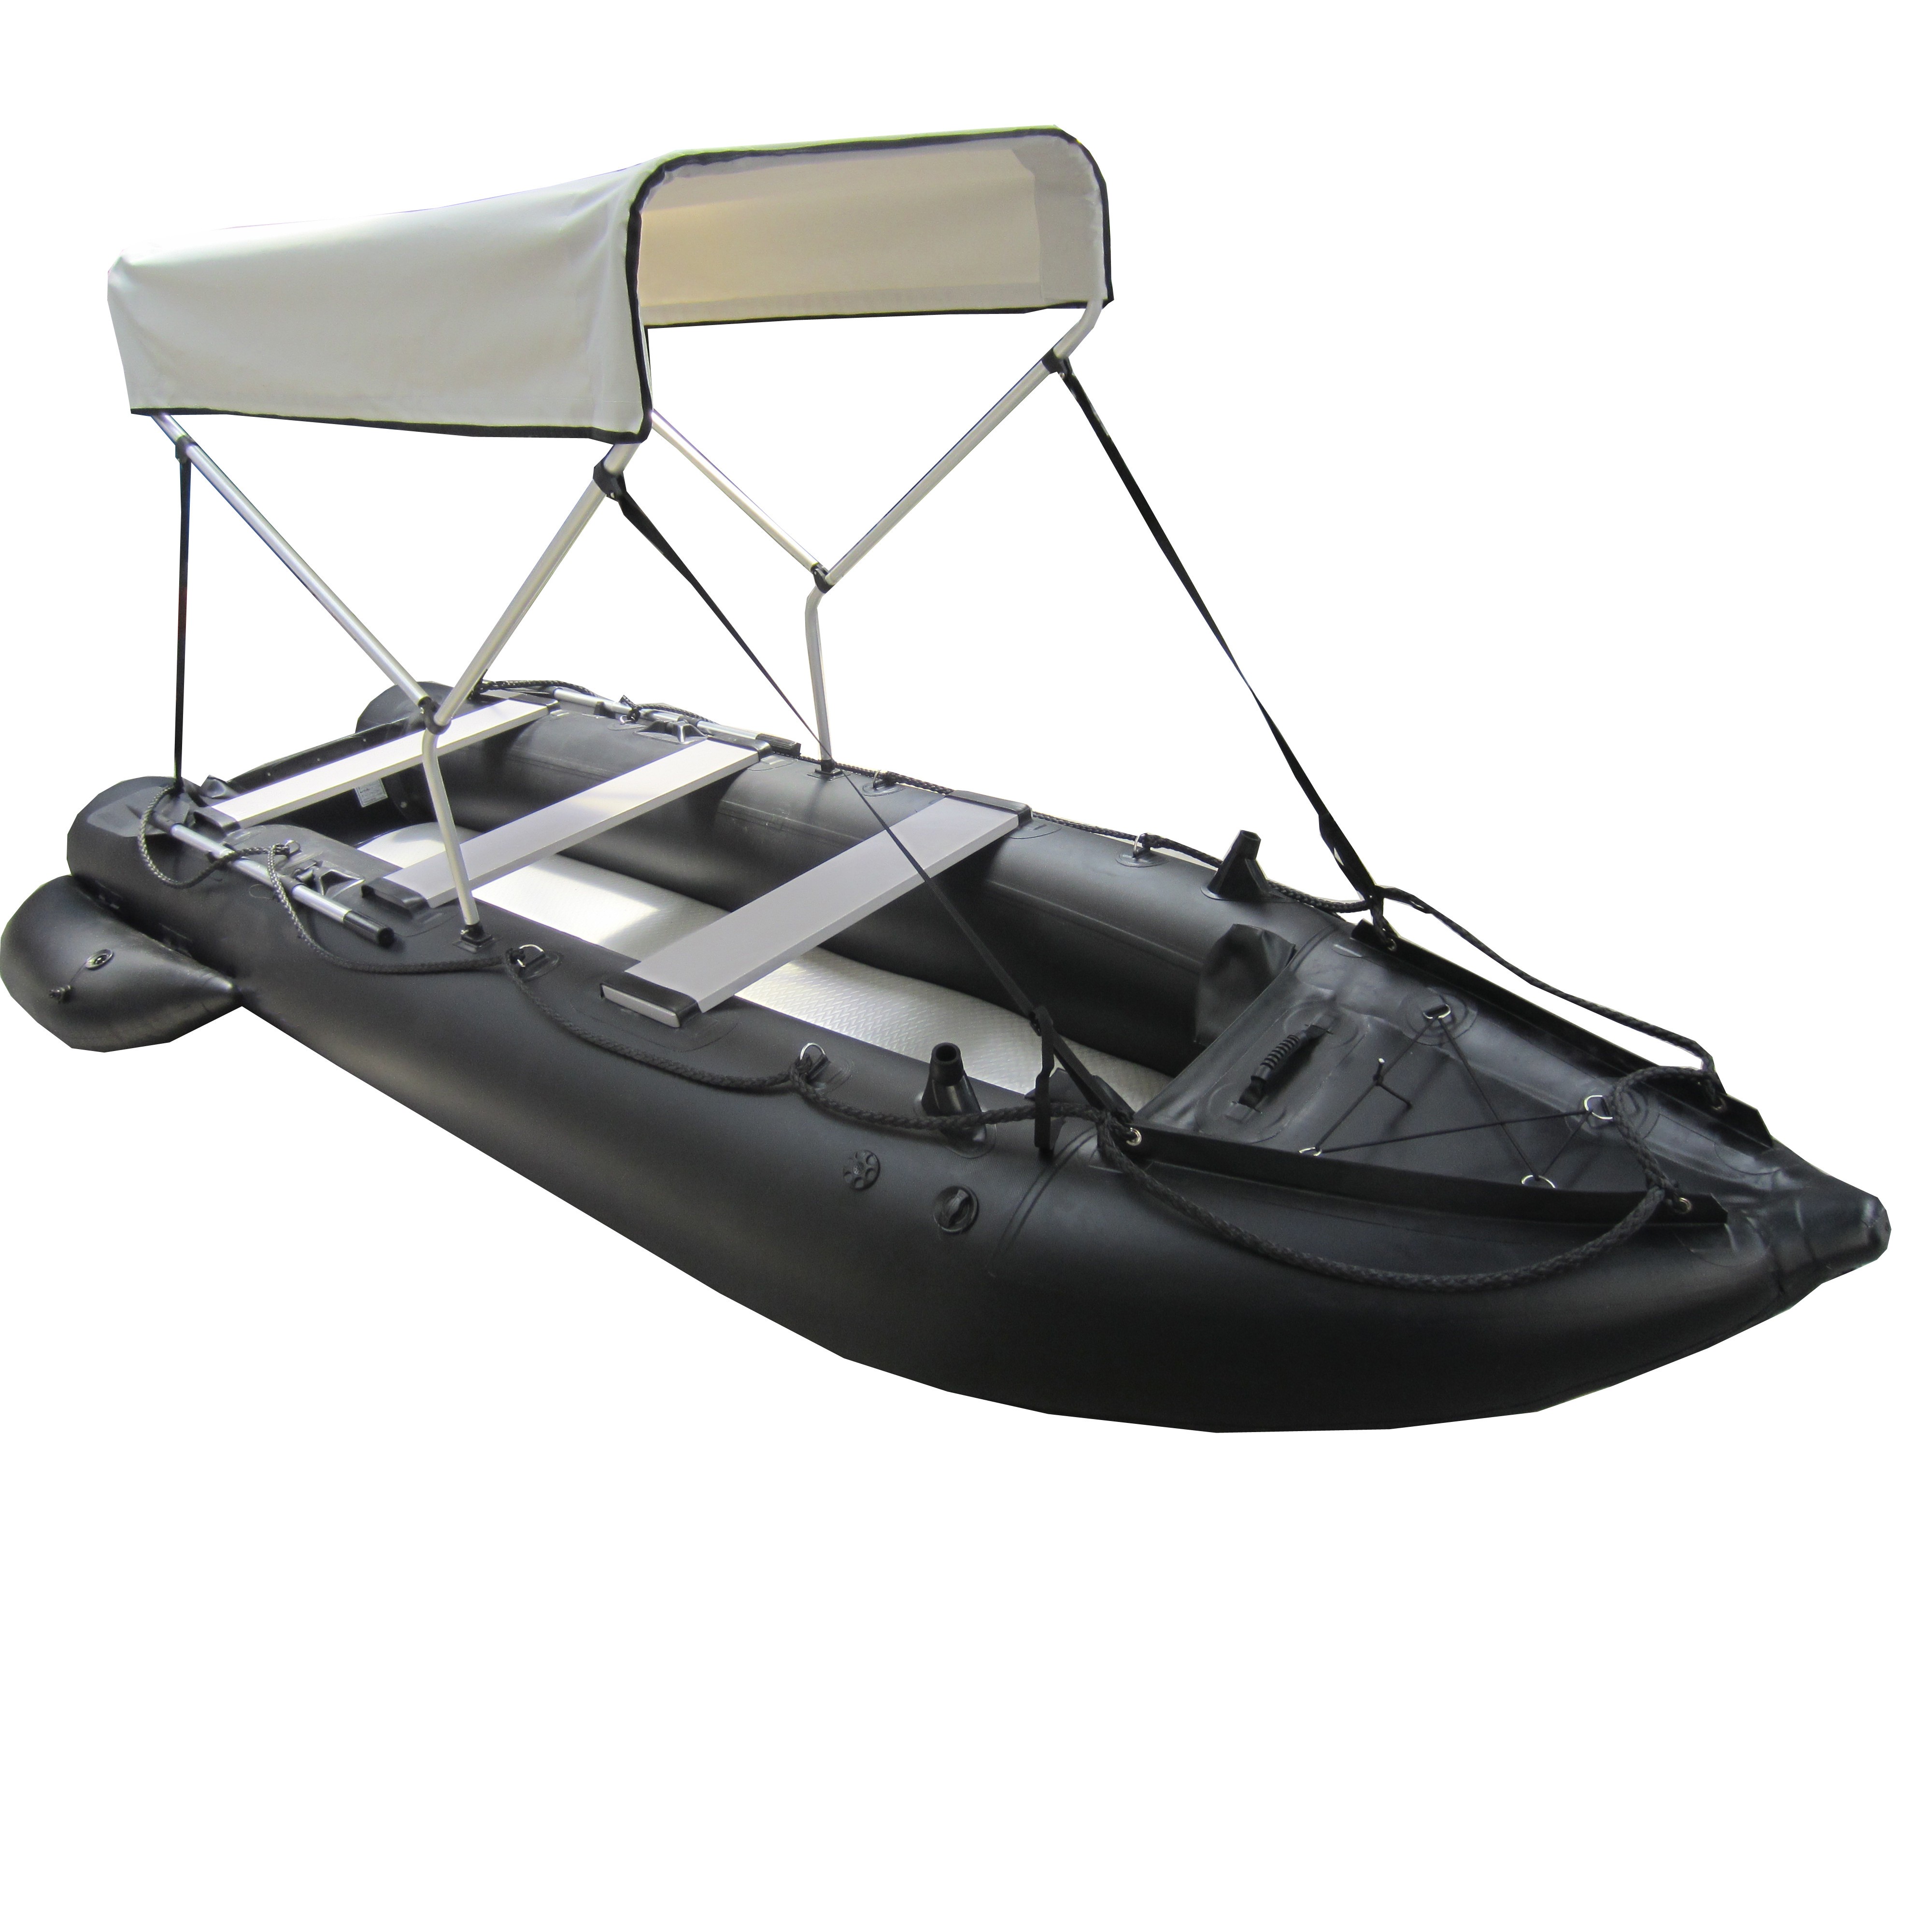 Inflatable fishing kayak and river rubber kayak